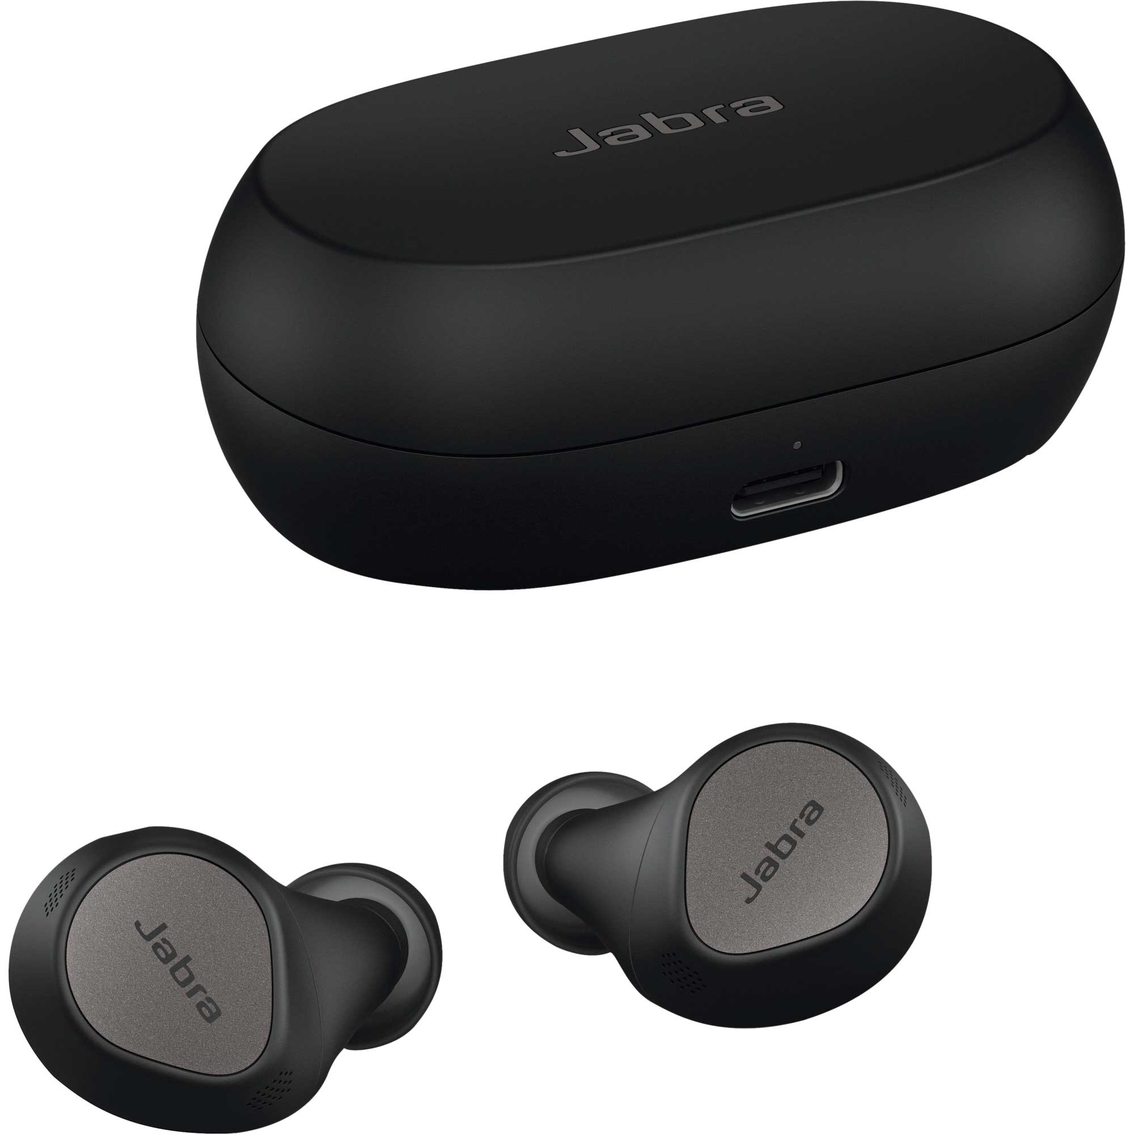 Jabra Elite 7 Pro True Wireless Earbuds, Titanium Black